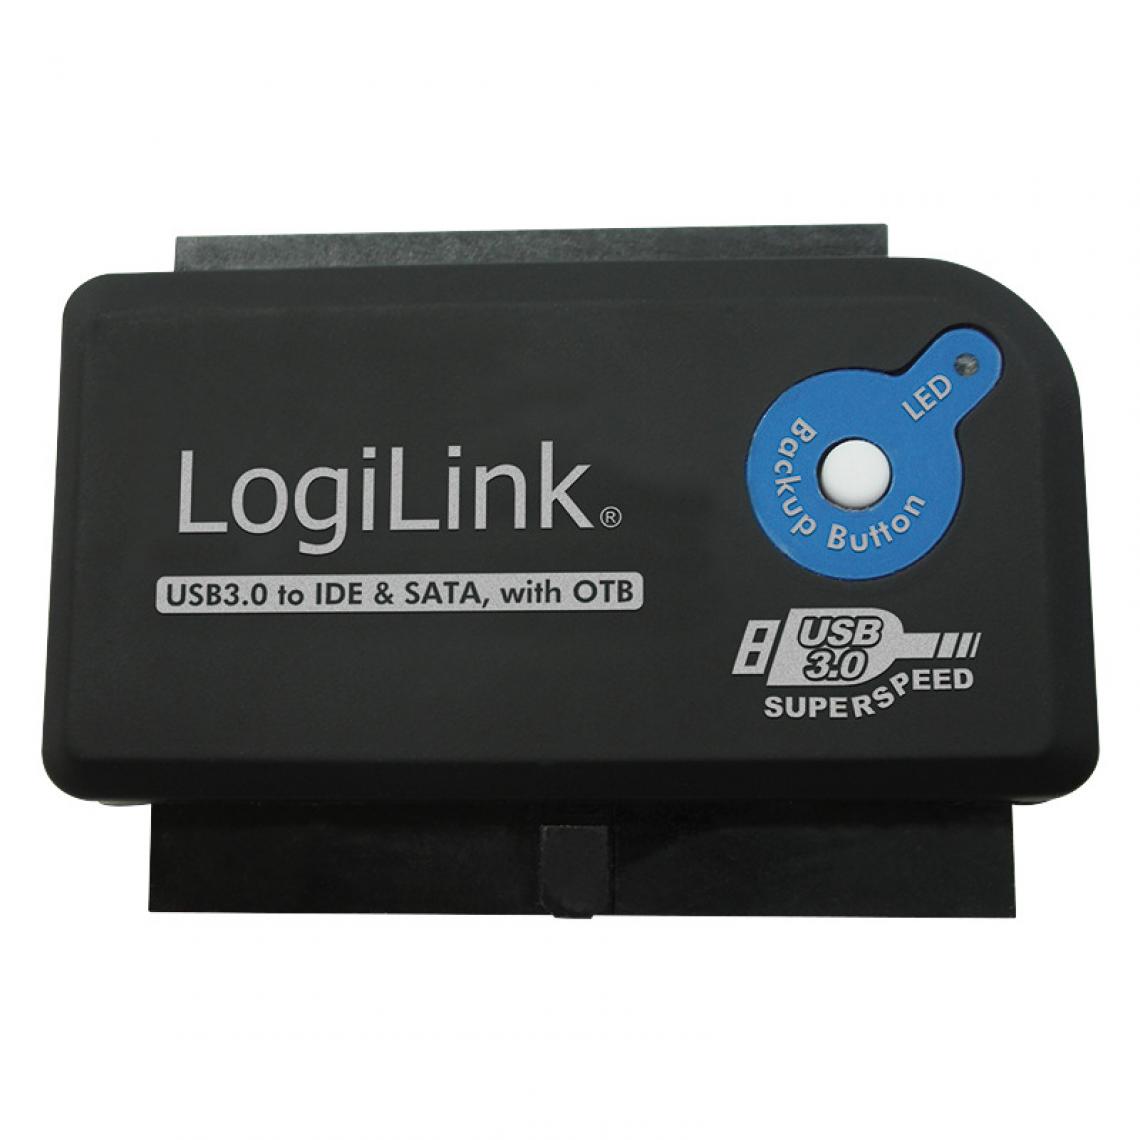 Logilink - LogiLink Adaptateur USB 3.0 - IDE & SATA avec fonction OTB () - Hub